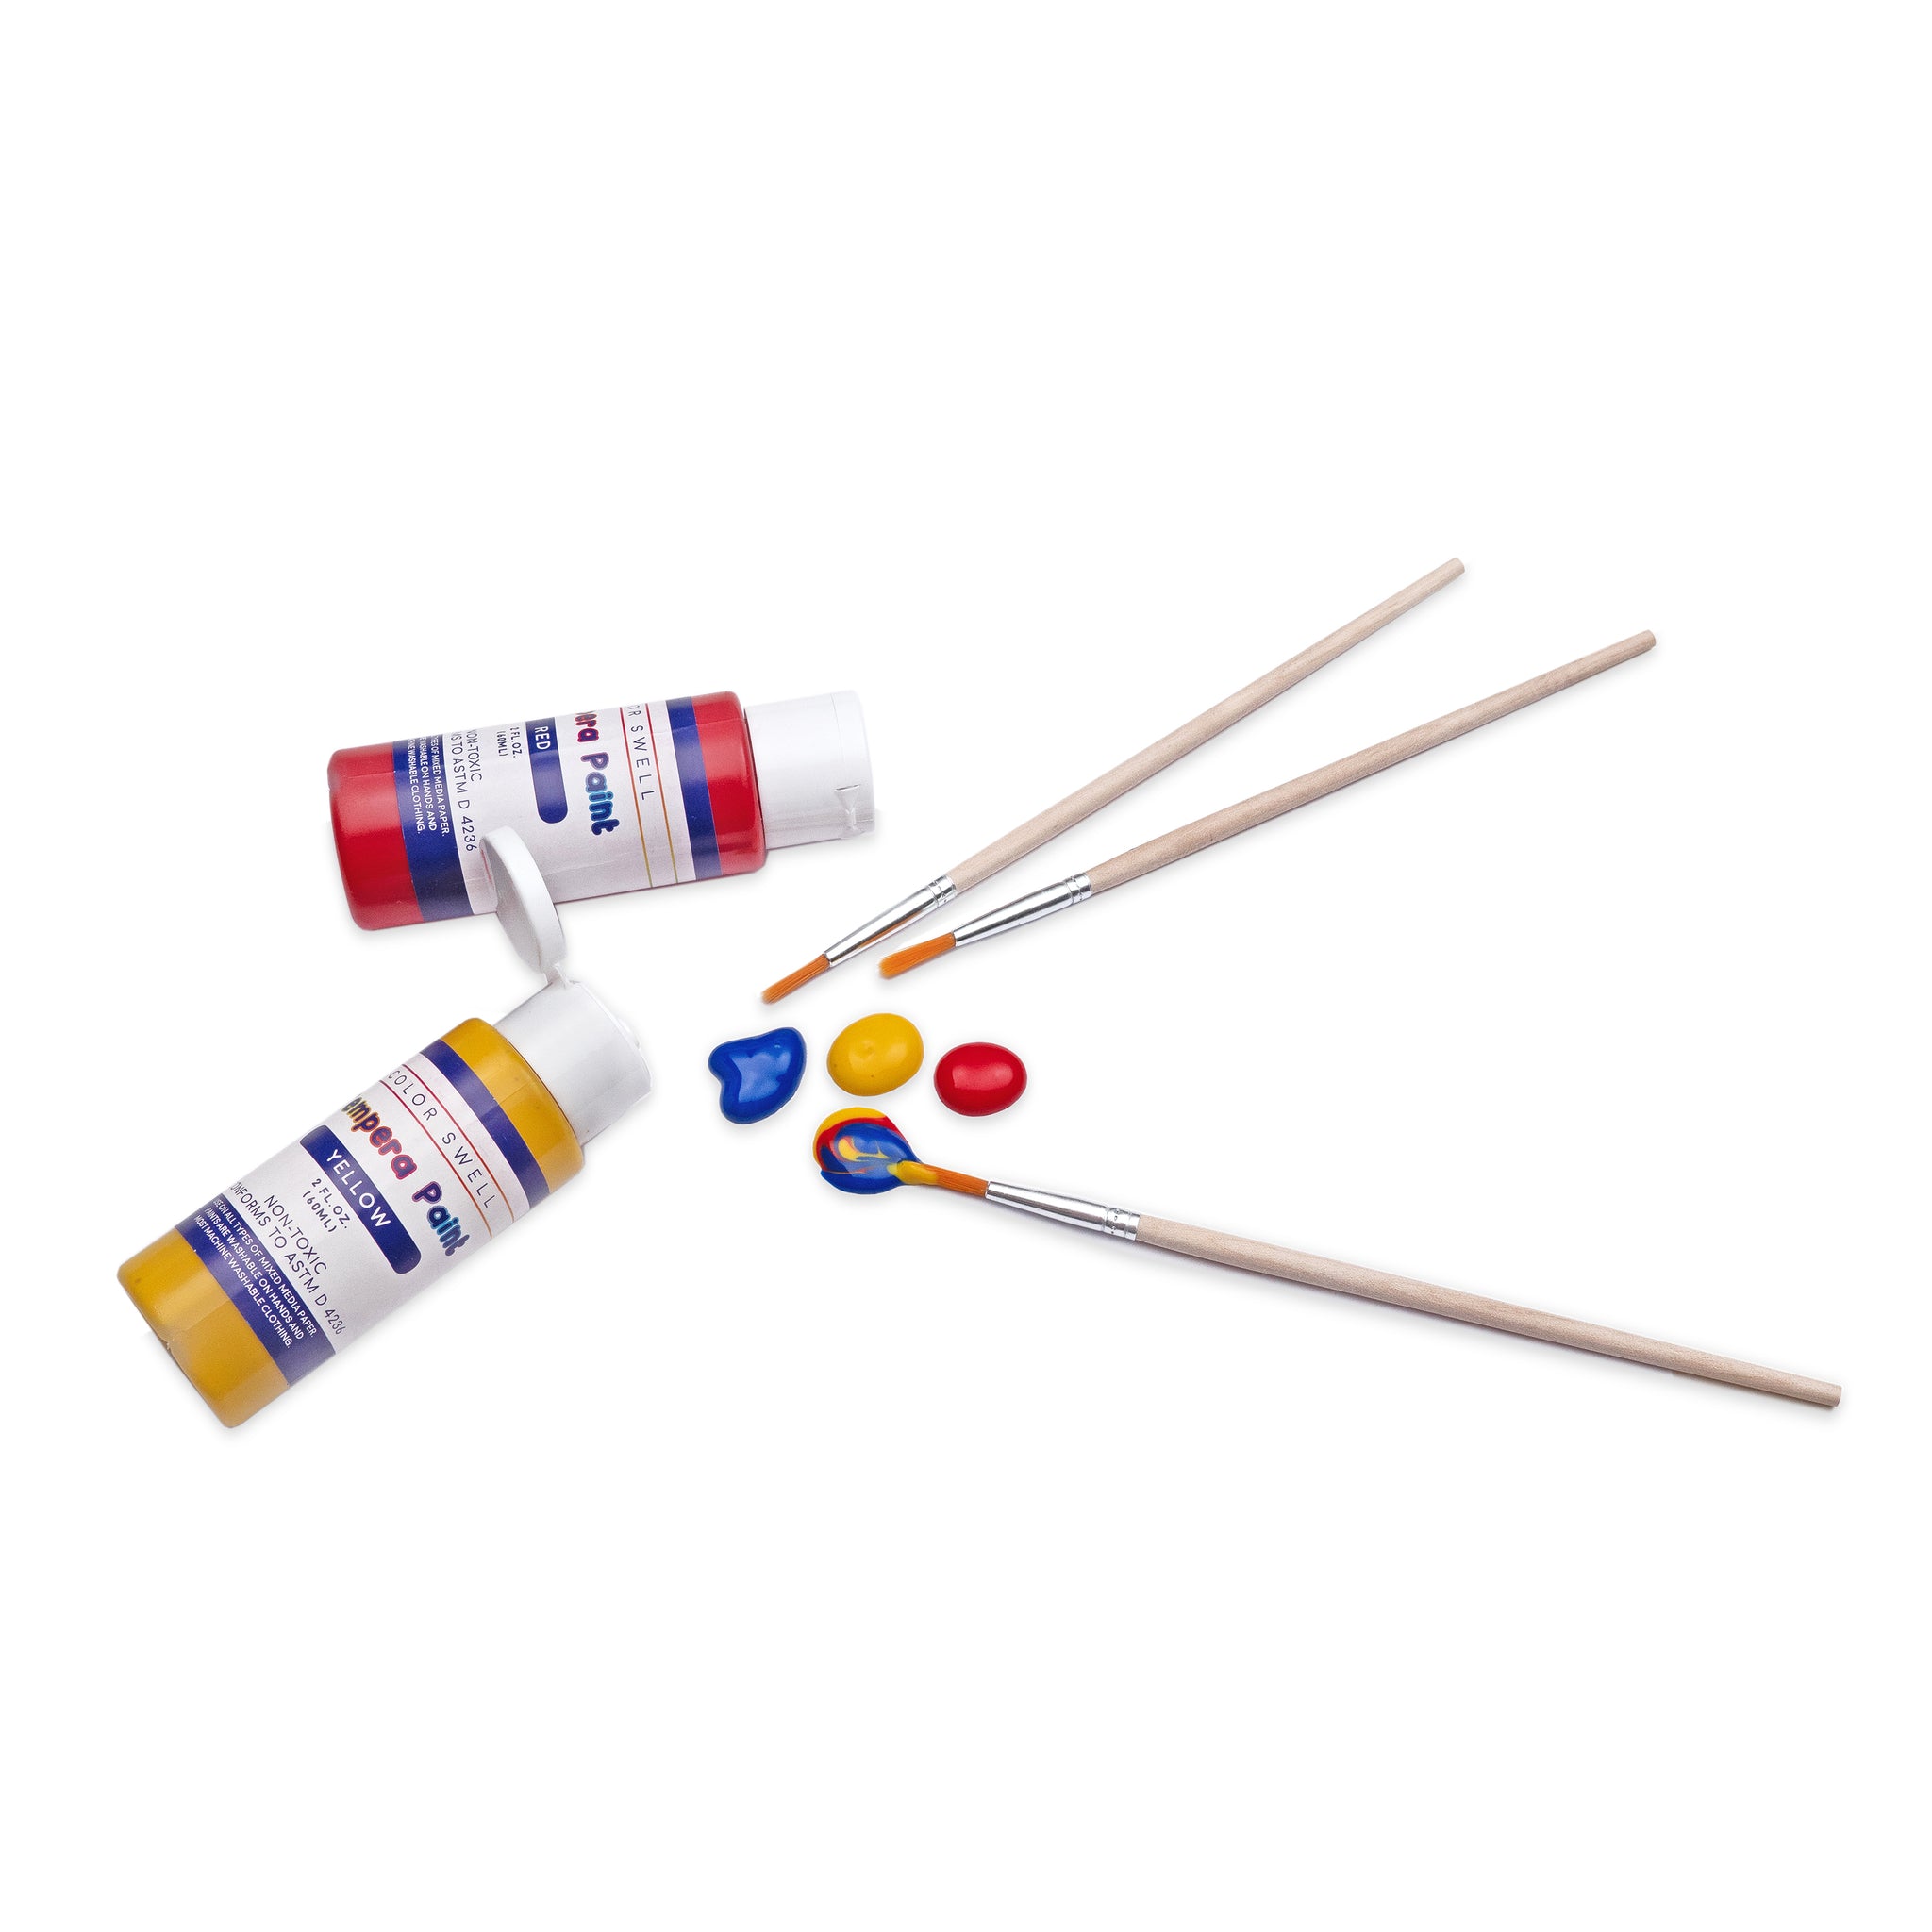 Tempera Paint Sticks, 30 Colors Solid Tempera Paint for Kids